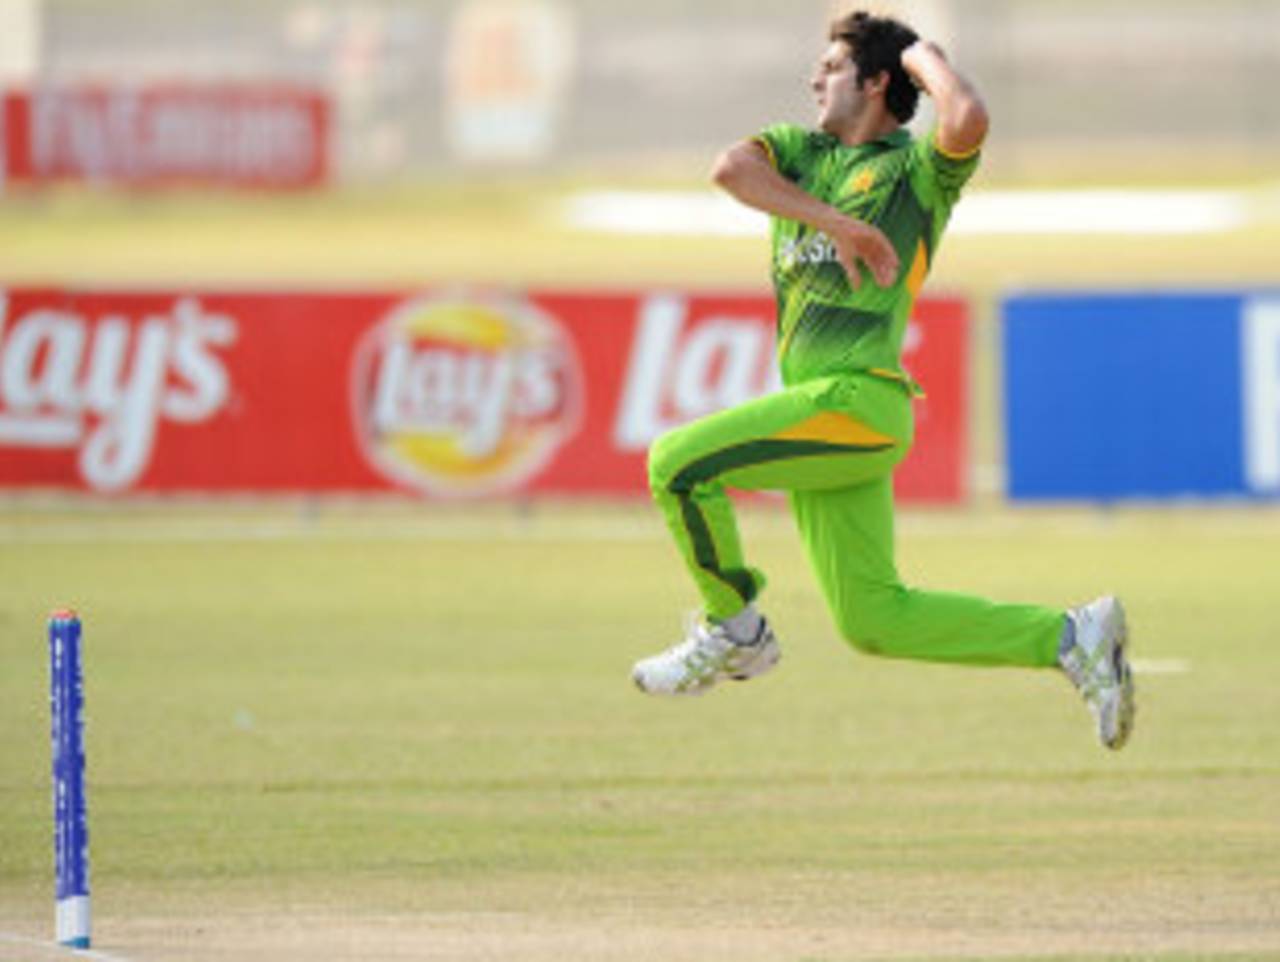 File photo - Karachi Whites' Mir Hamza picked up his sixth five-wicket haul in just 11 matches&nbsp;&nbsp;&bull;&nbsp;&nbsp;ICC/Getty